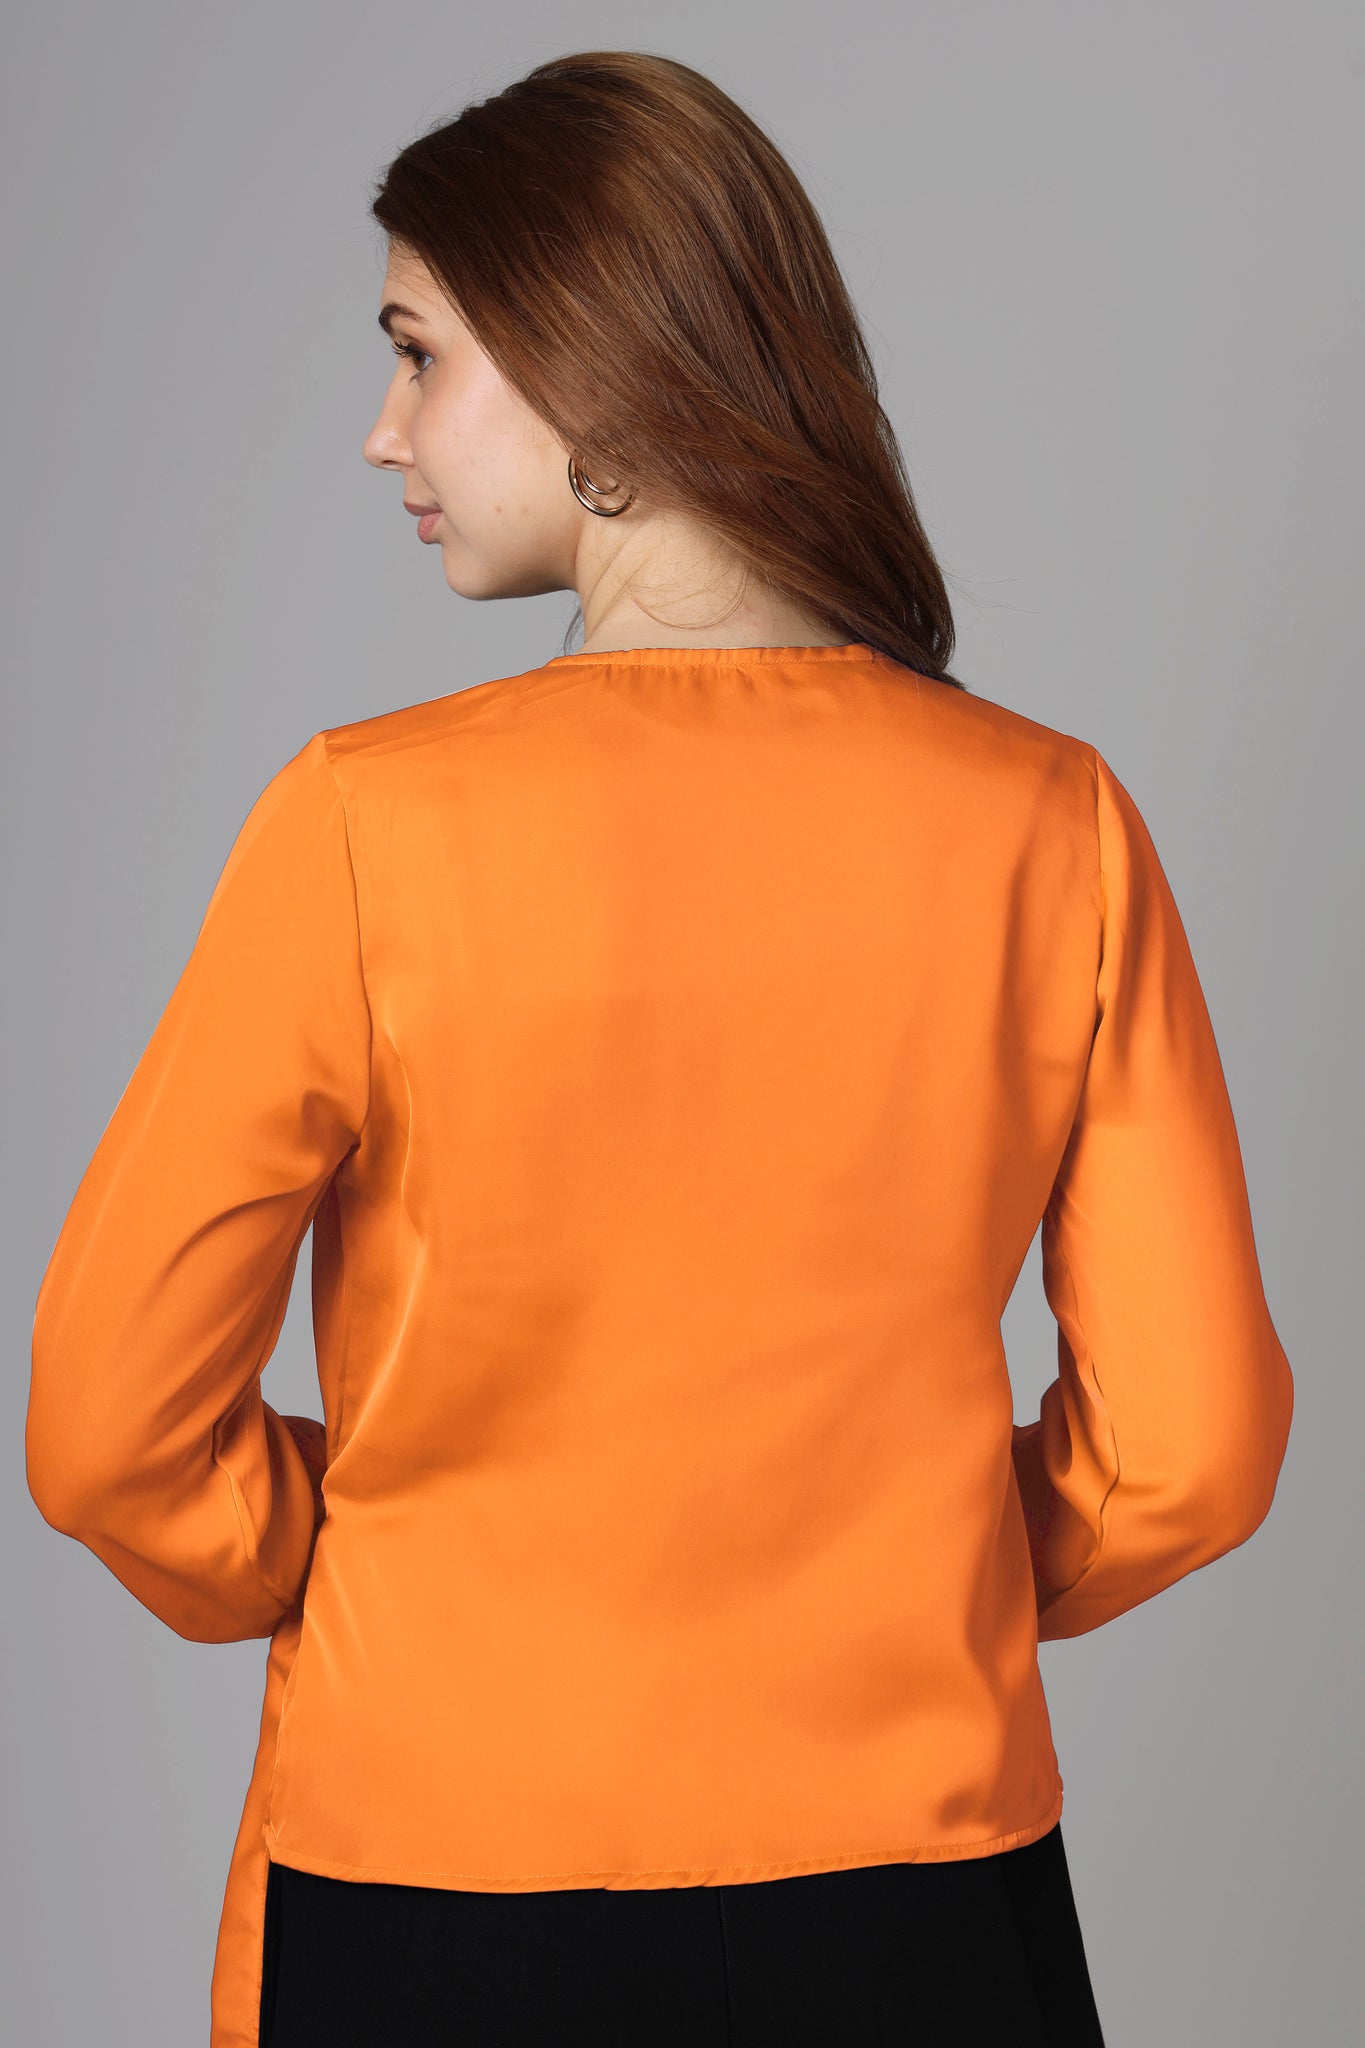 Classic Plain Orange Top For Women